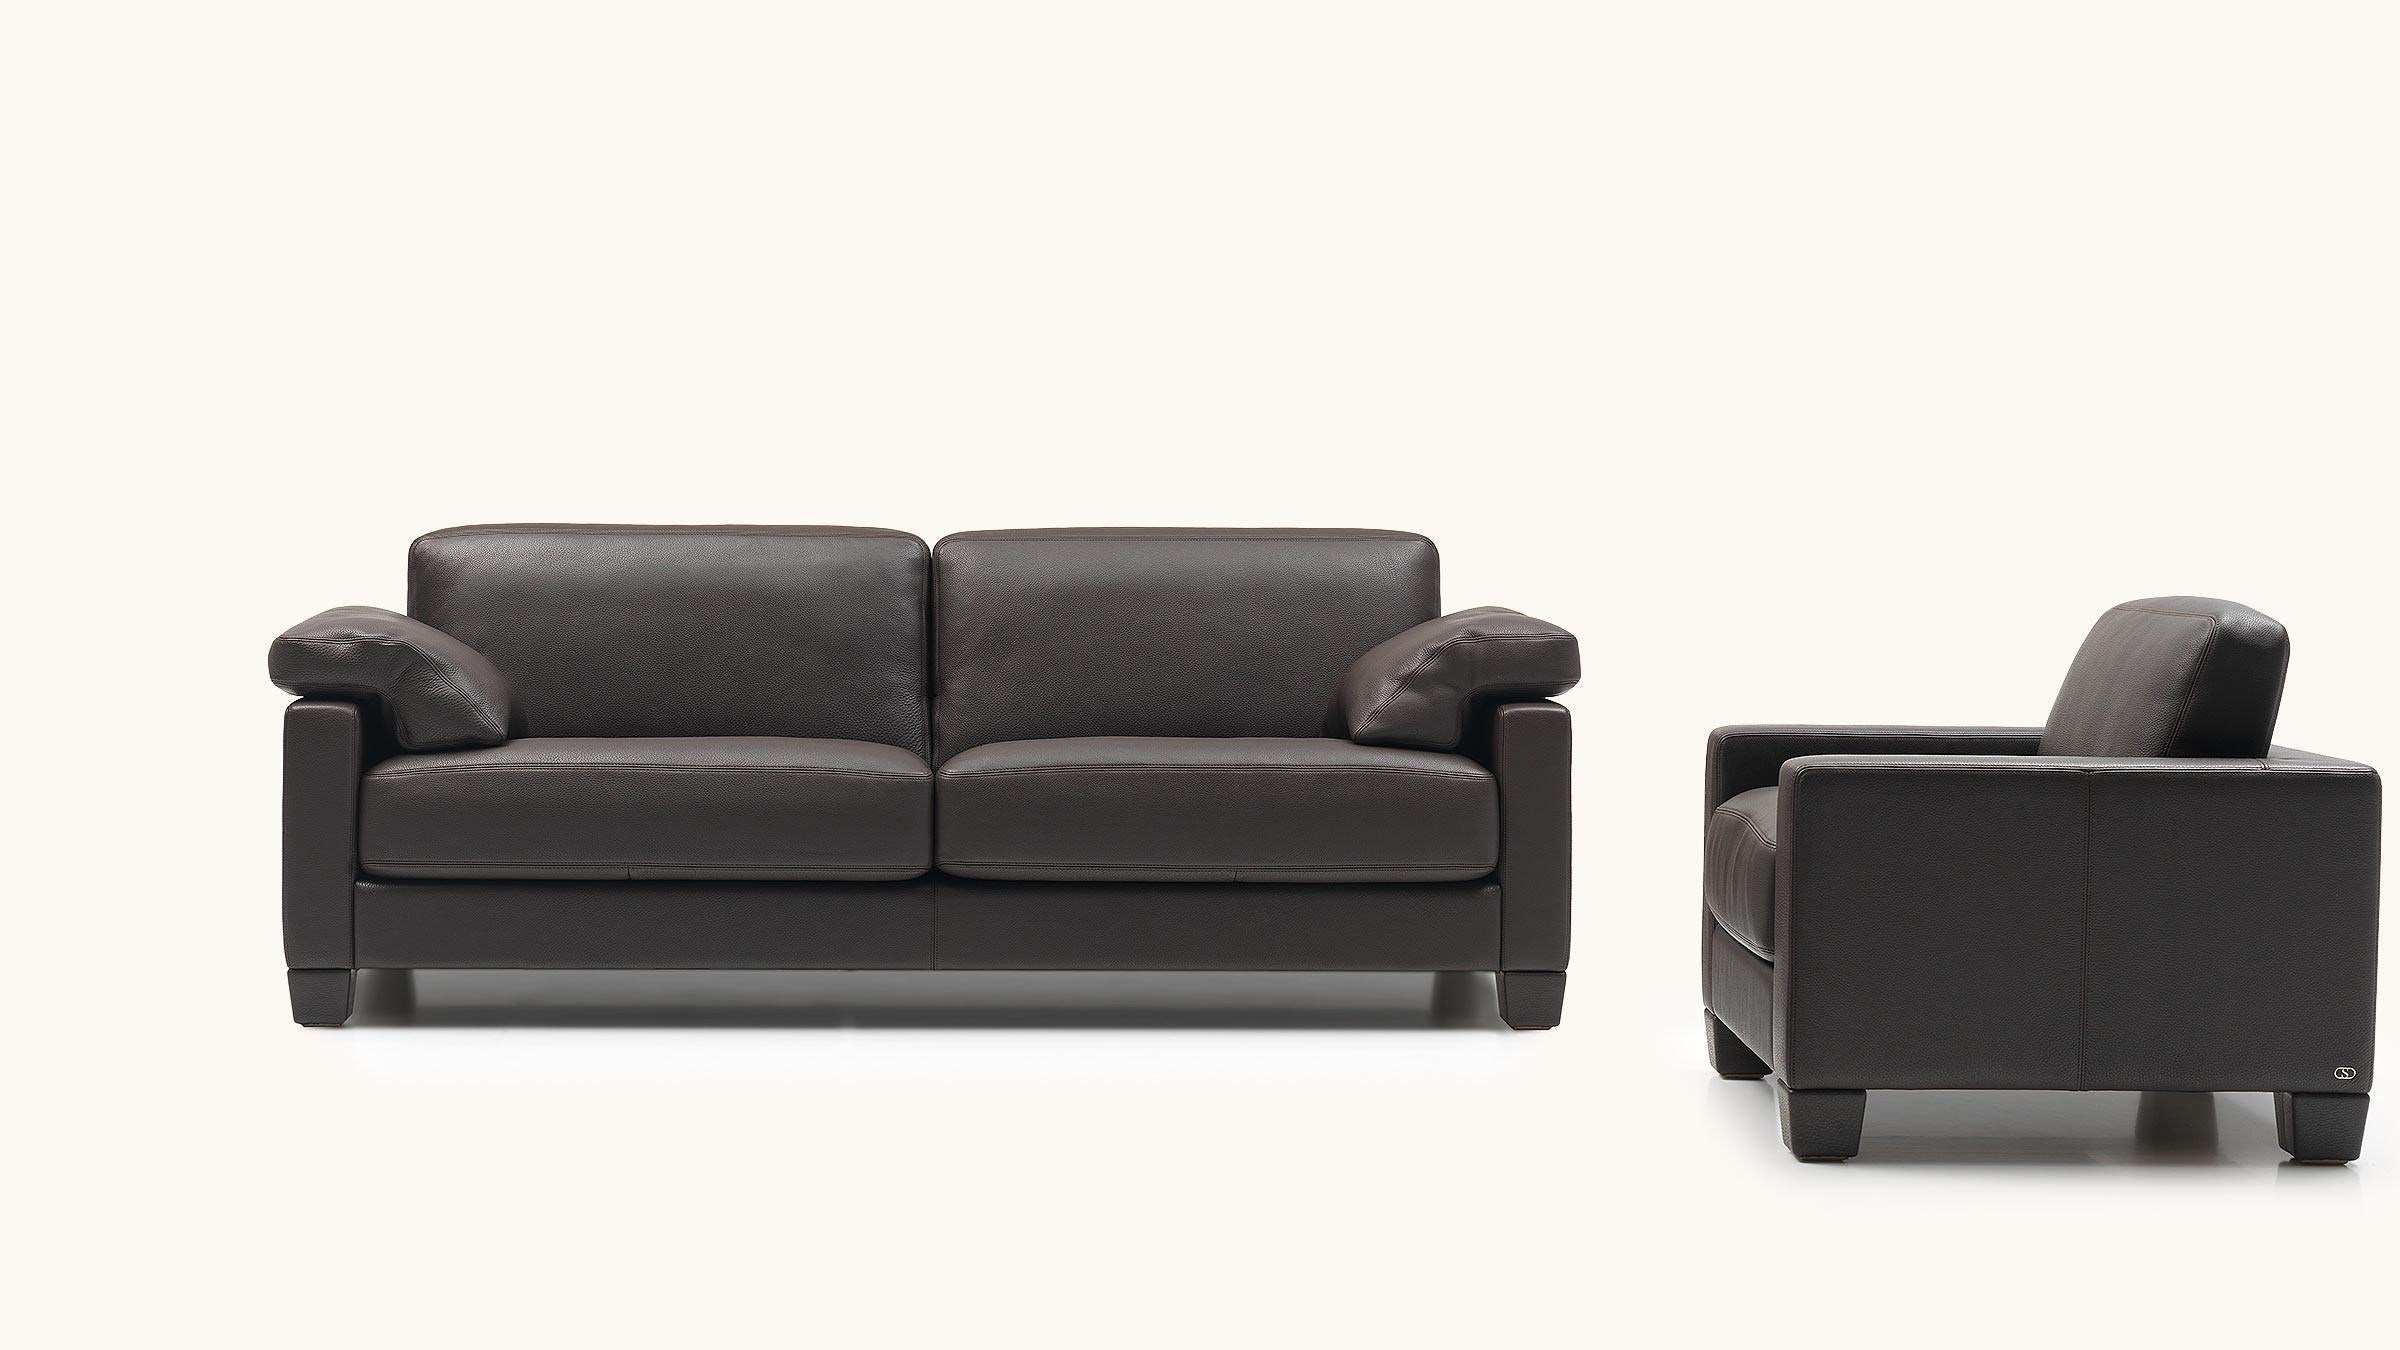 Swiss De Sede DS-17 Three-Seat Sofa in Black Upholstery by Antonella Scarpitta For Sale